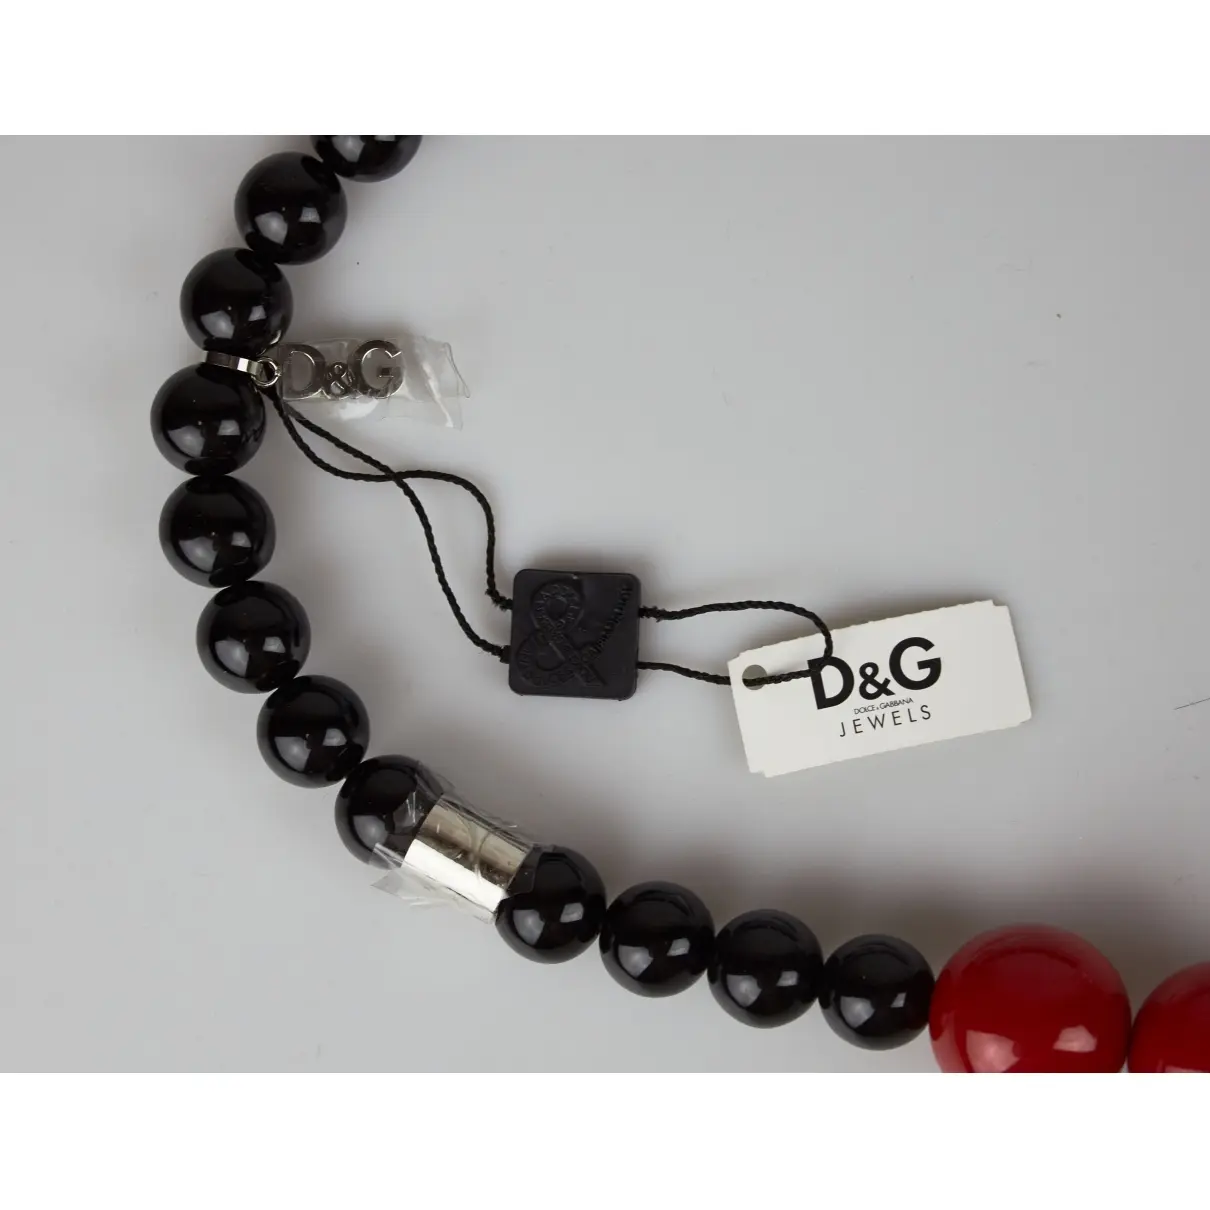 Buy D&G Necklace online